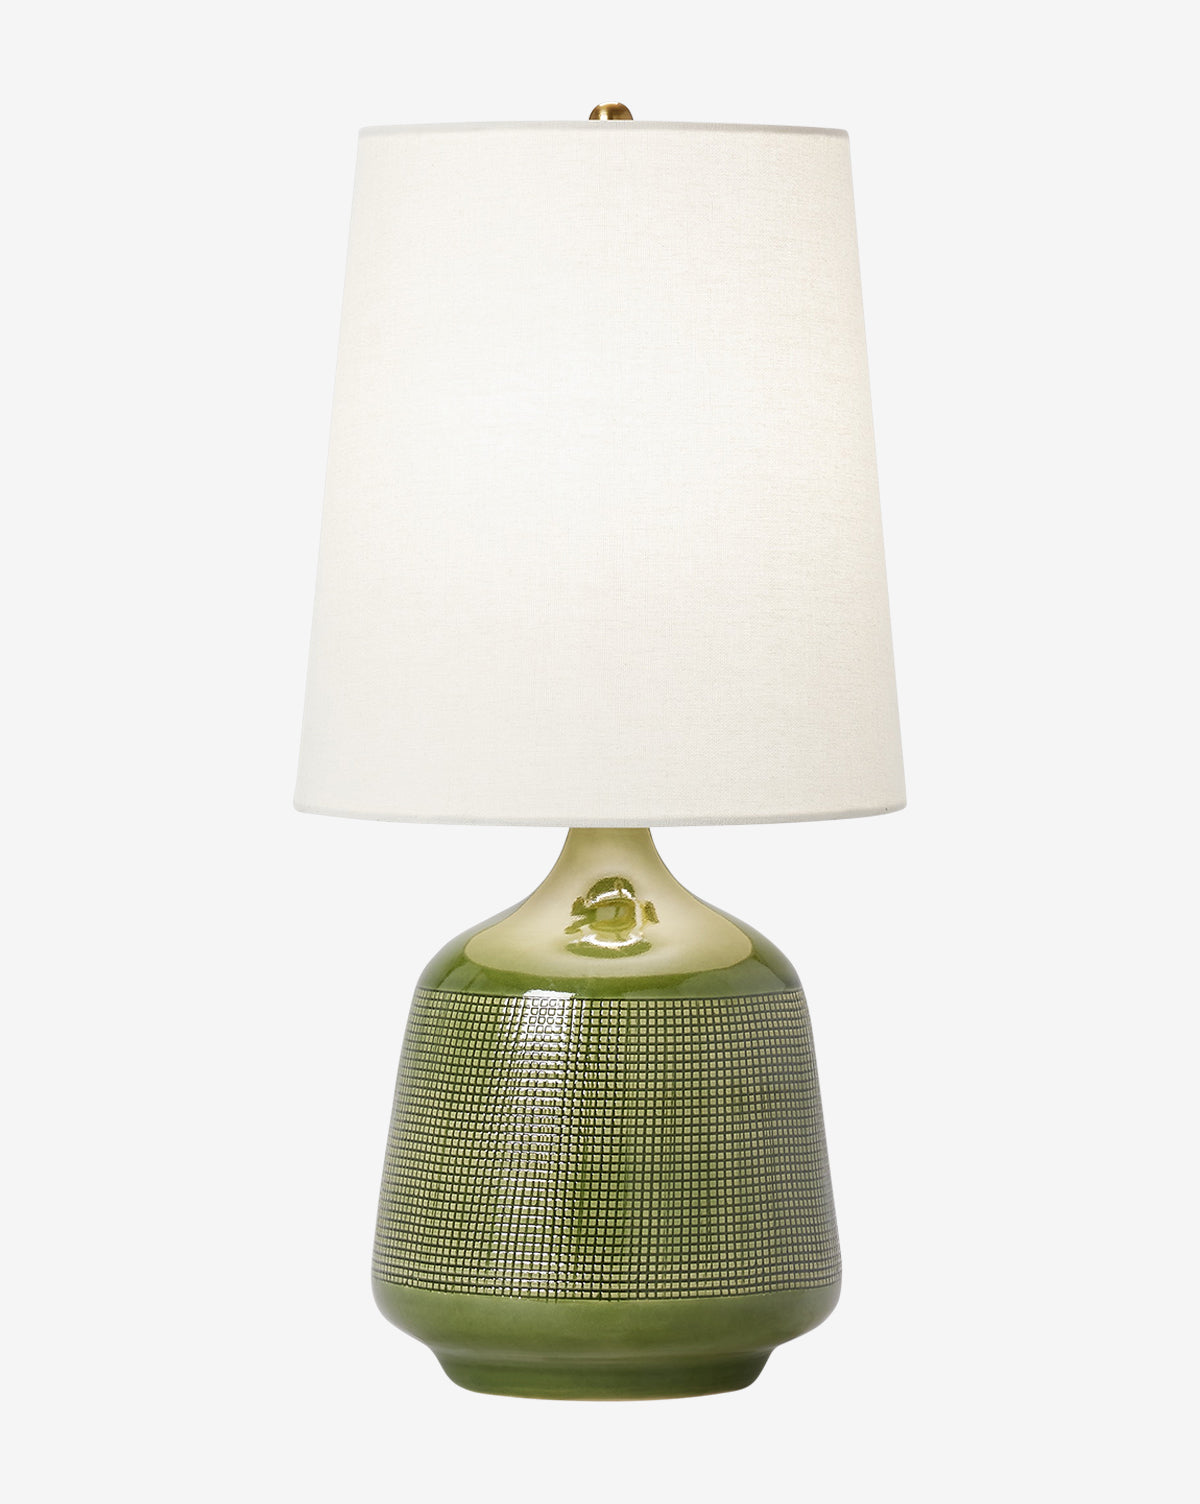 Generation Lighting, Ornella Table Lamp